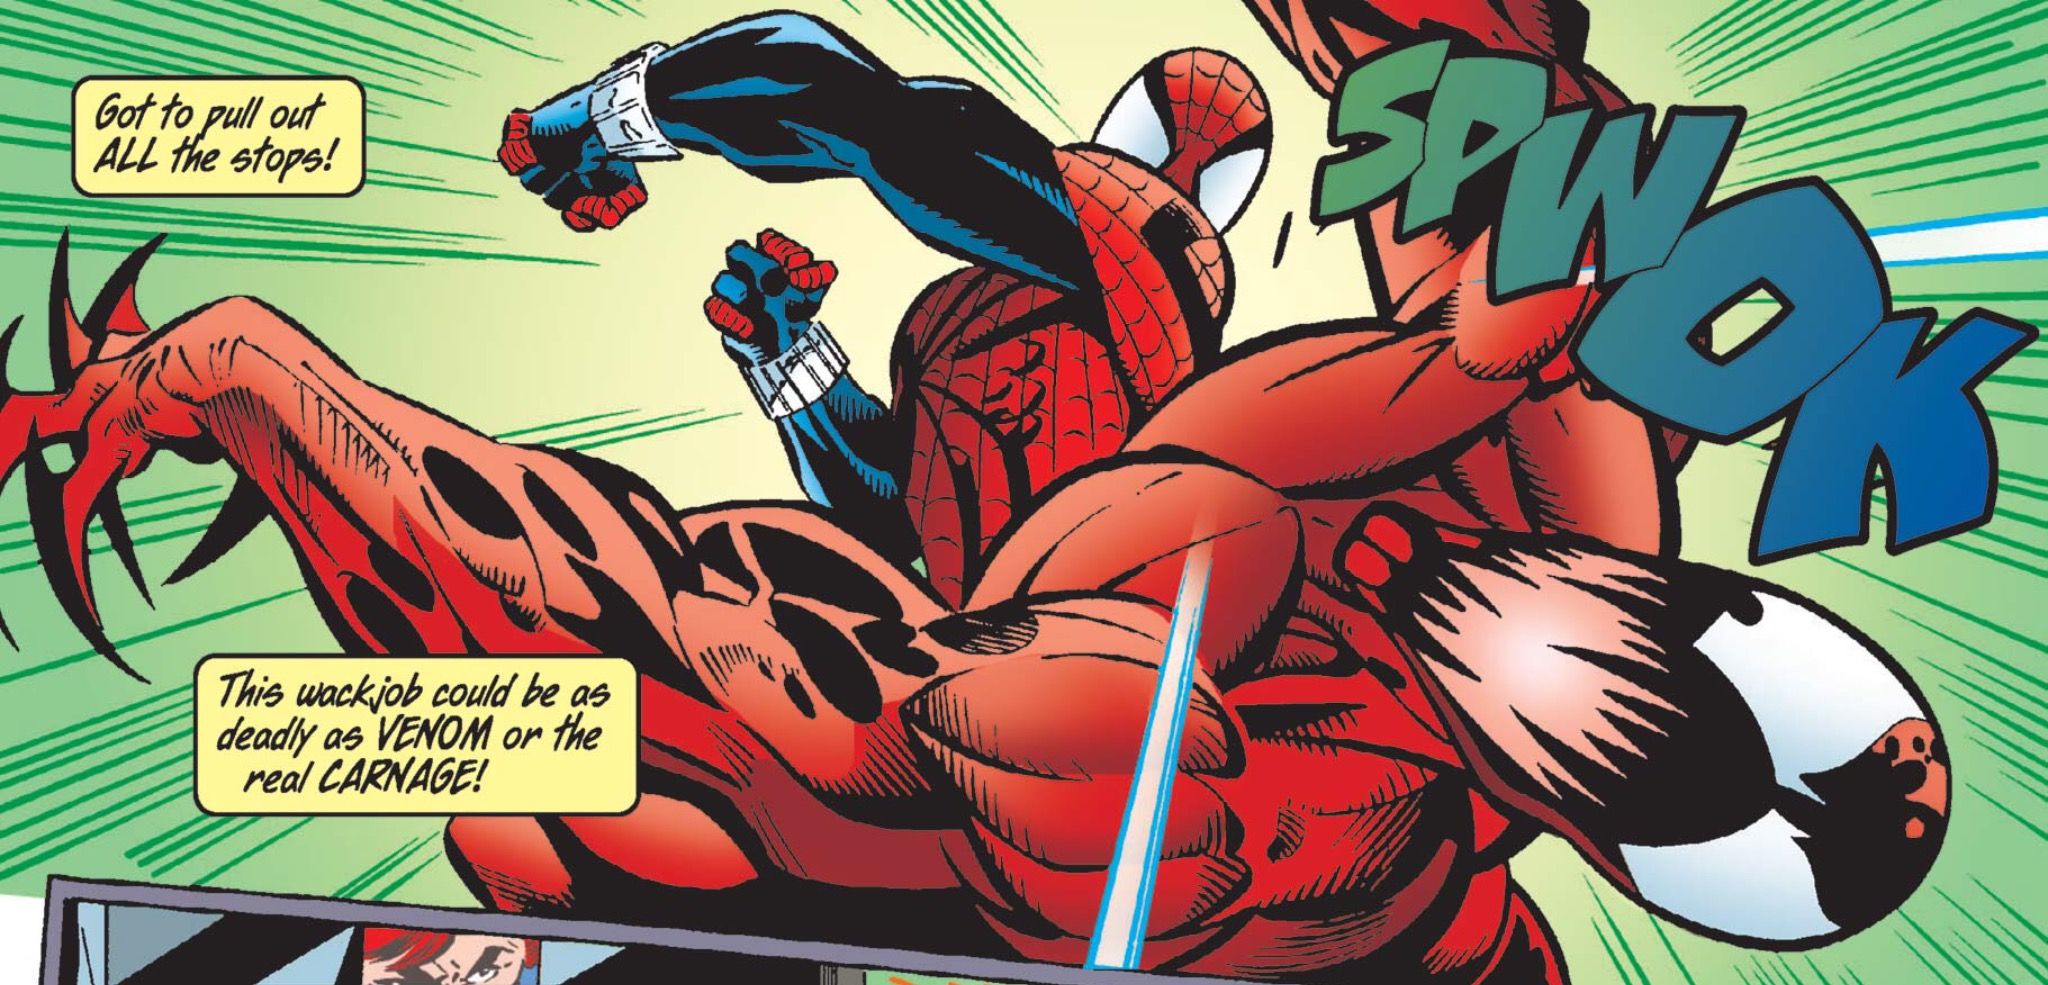 John Jonah Jameson III as Carnage in Amazing Spider-Man 410